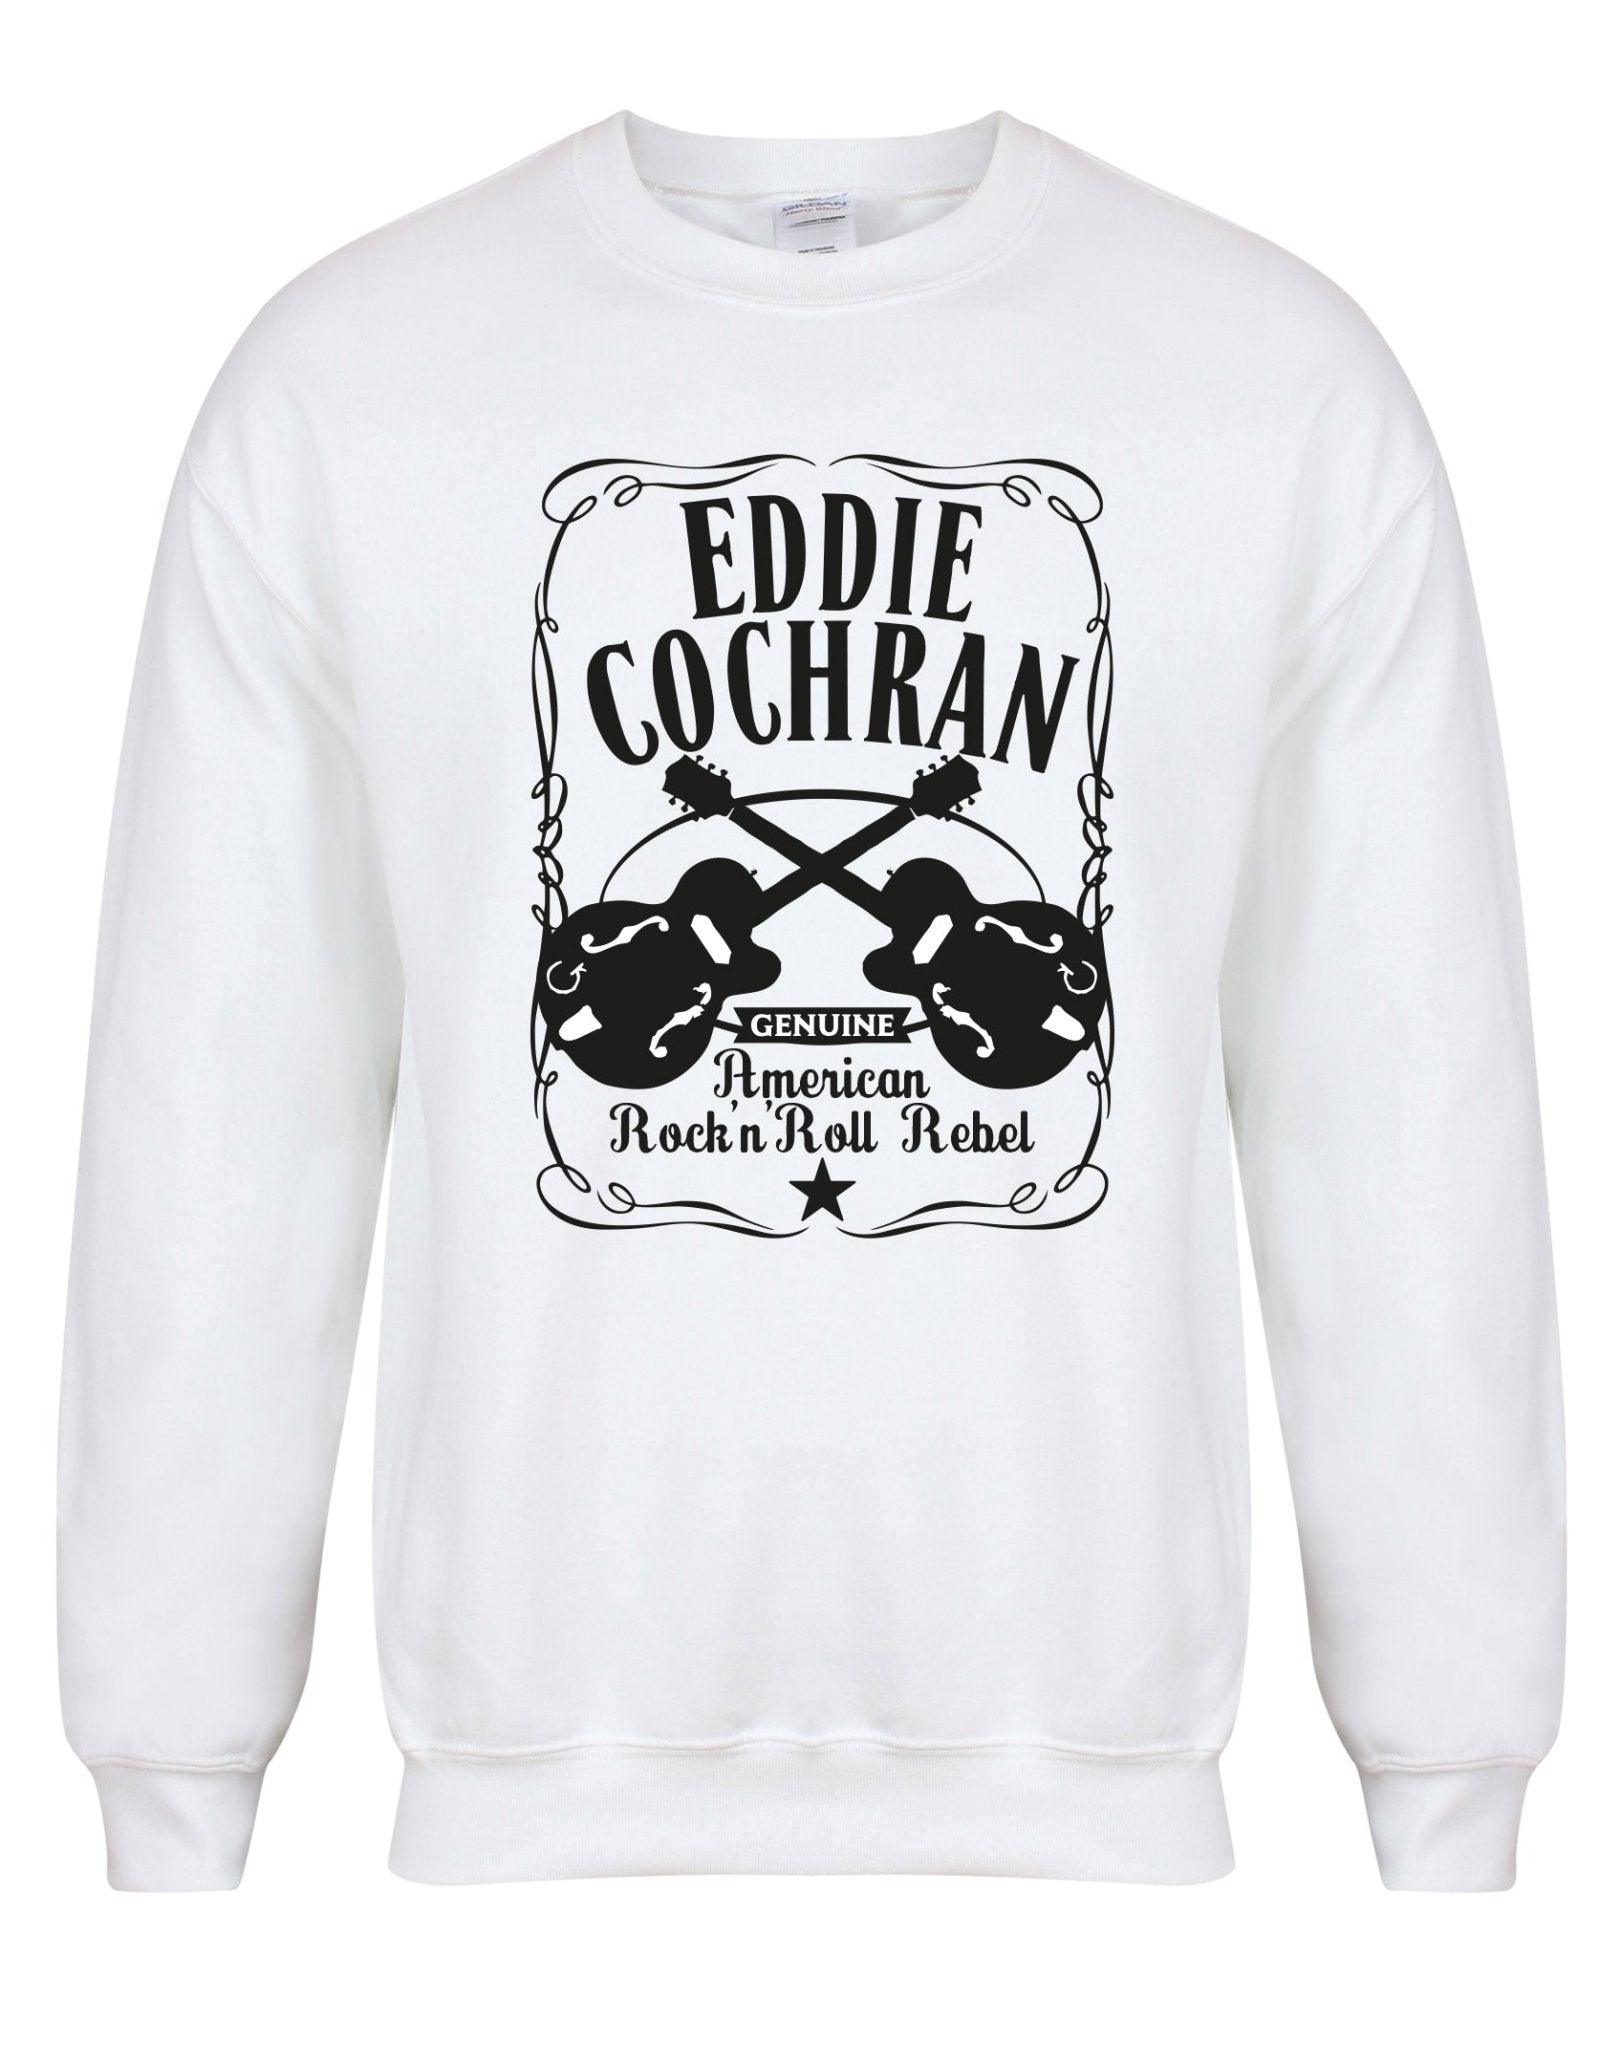 Eddie Cochran - cross Gretsch guitars - unisex sweatshirt - various colours - Dirty Stop Outs